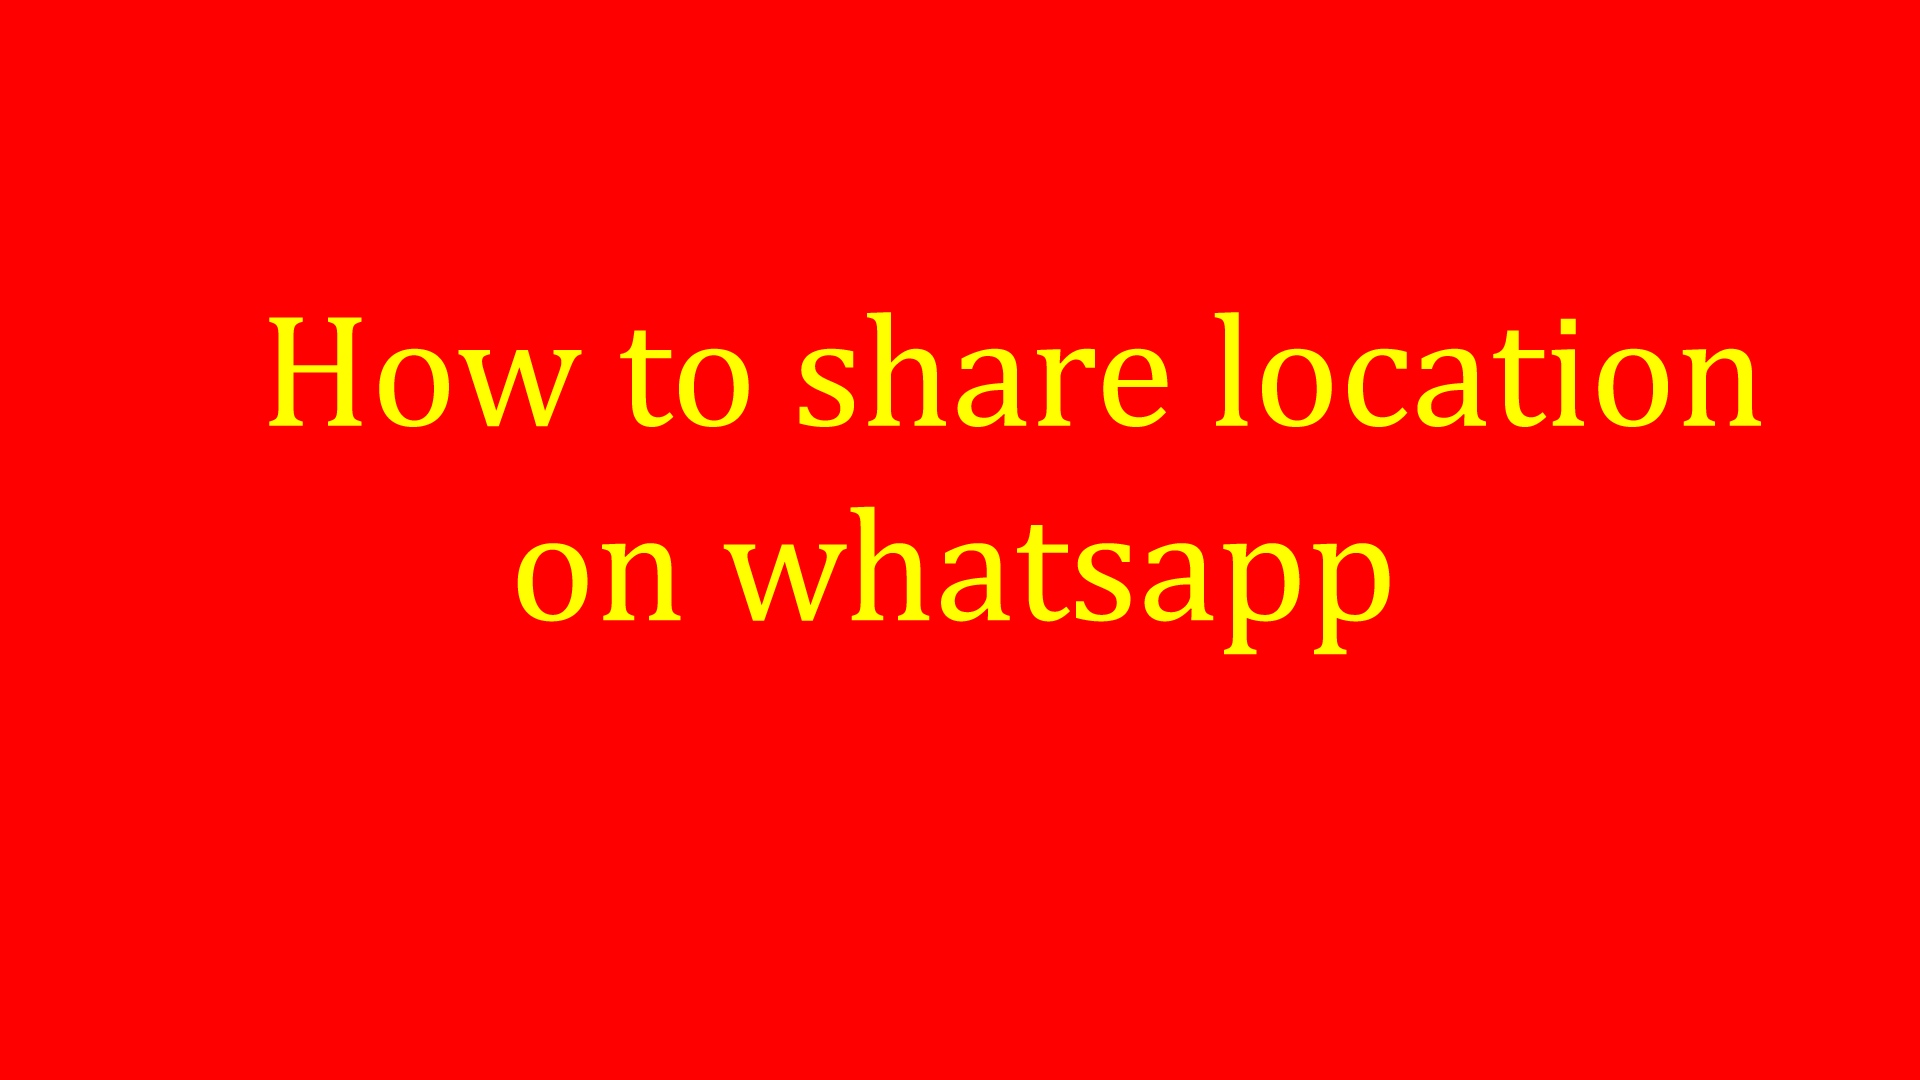 Share location on whatsapp